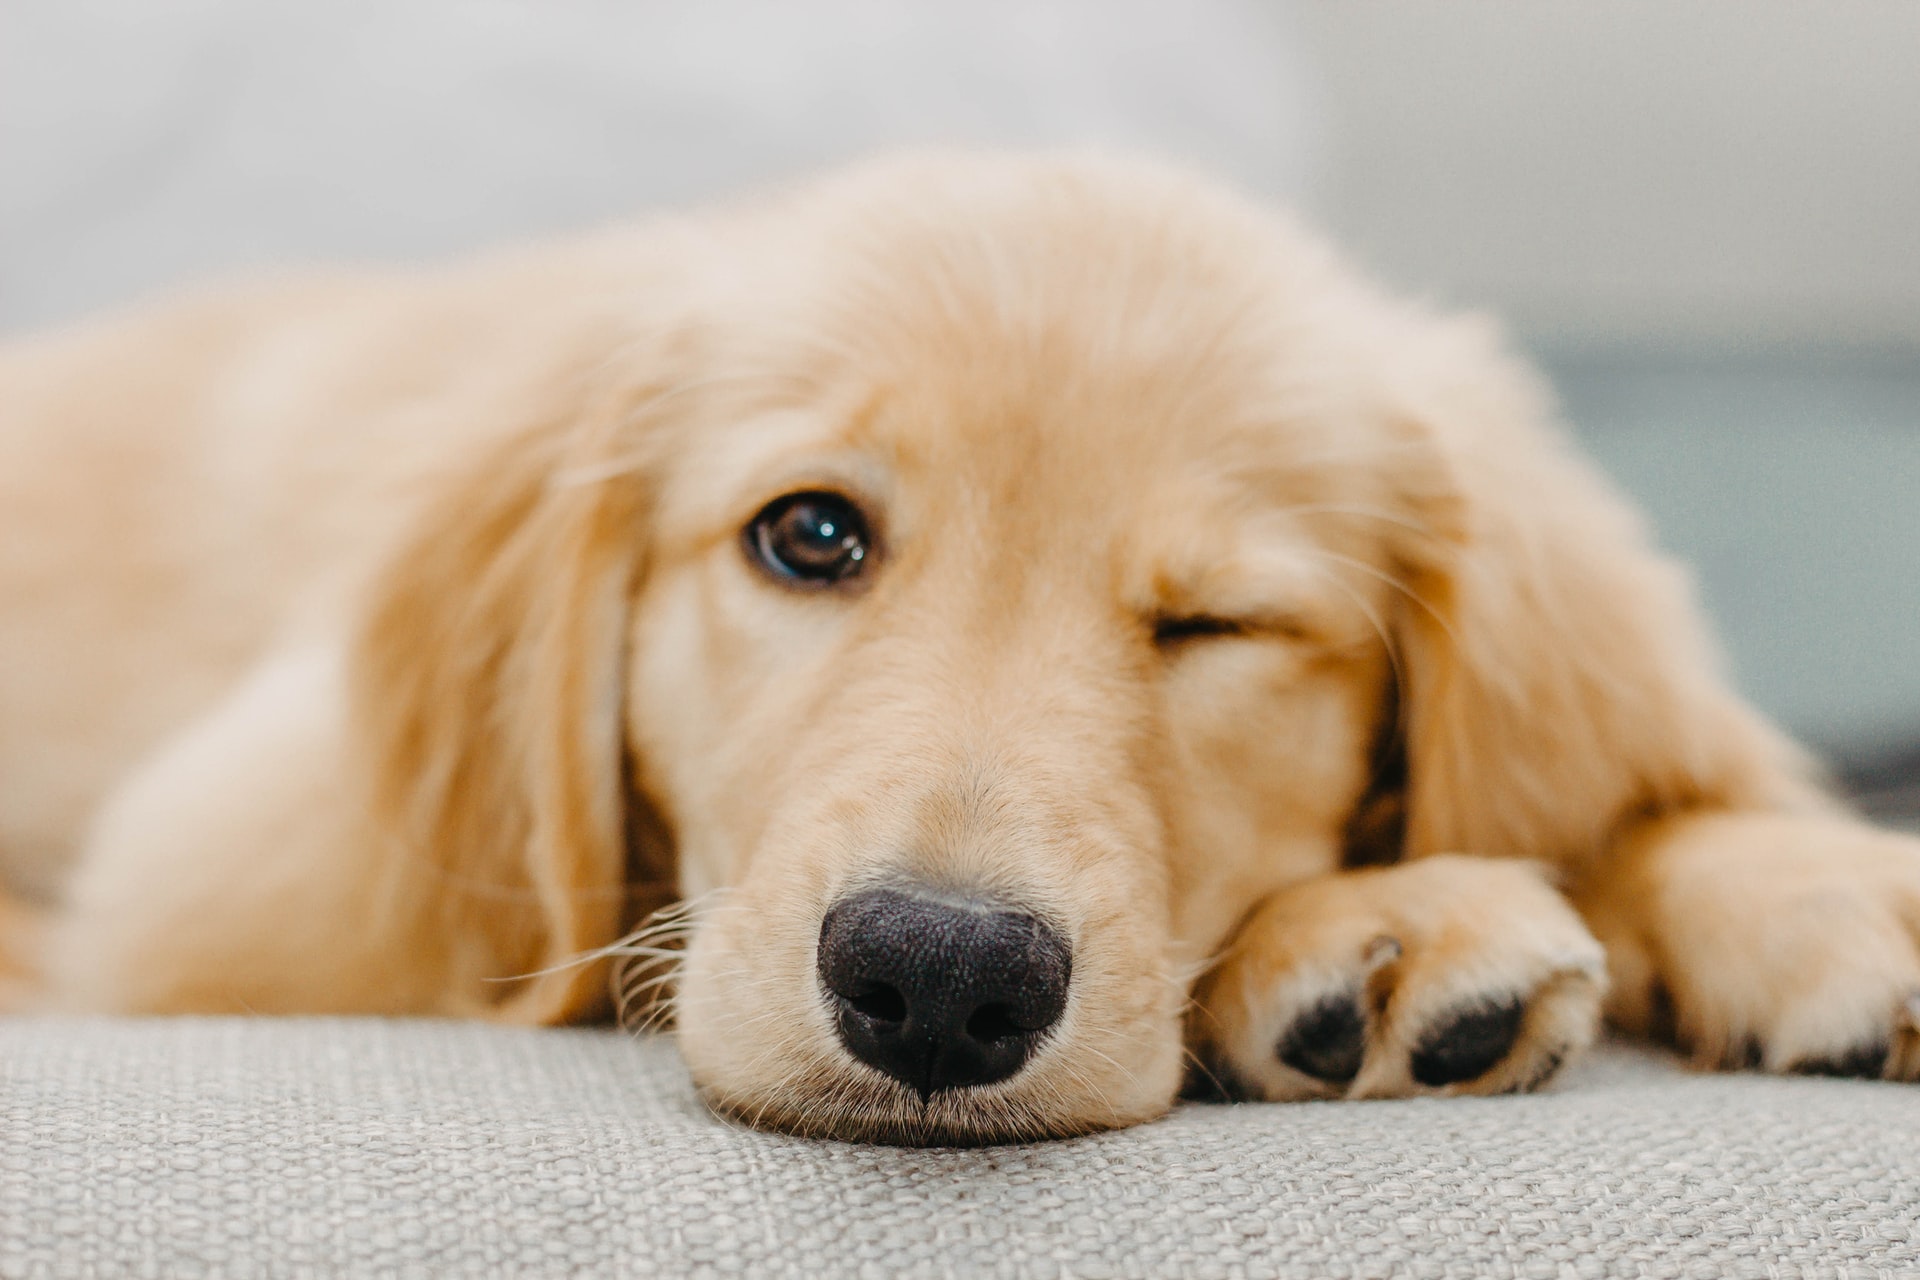 winking golden retriever puppy lying on white textile